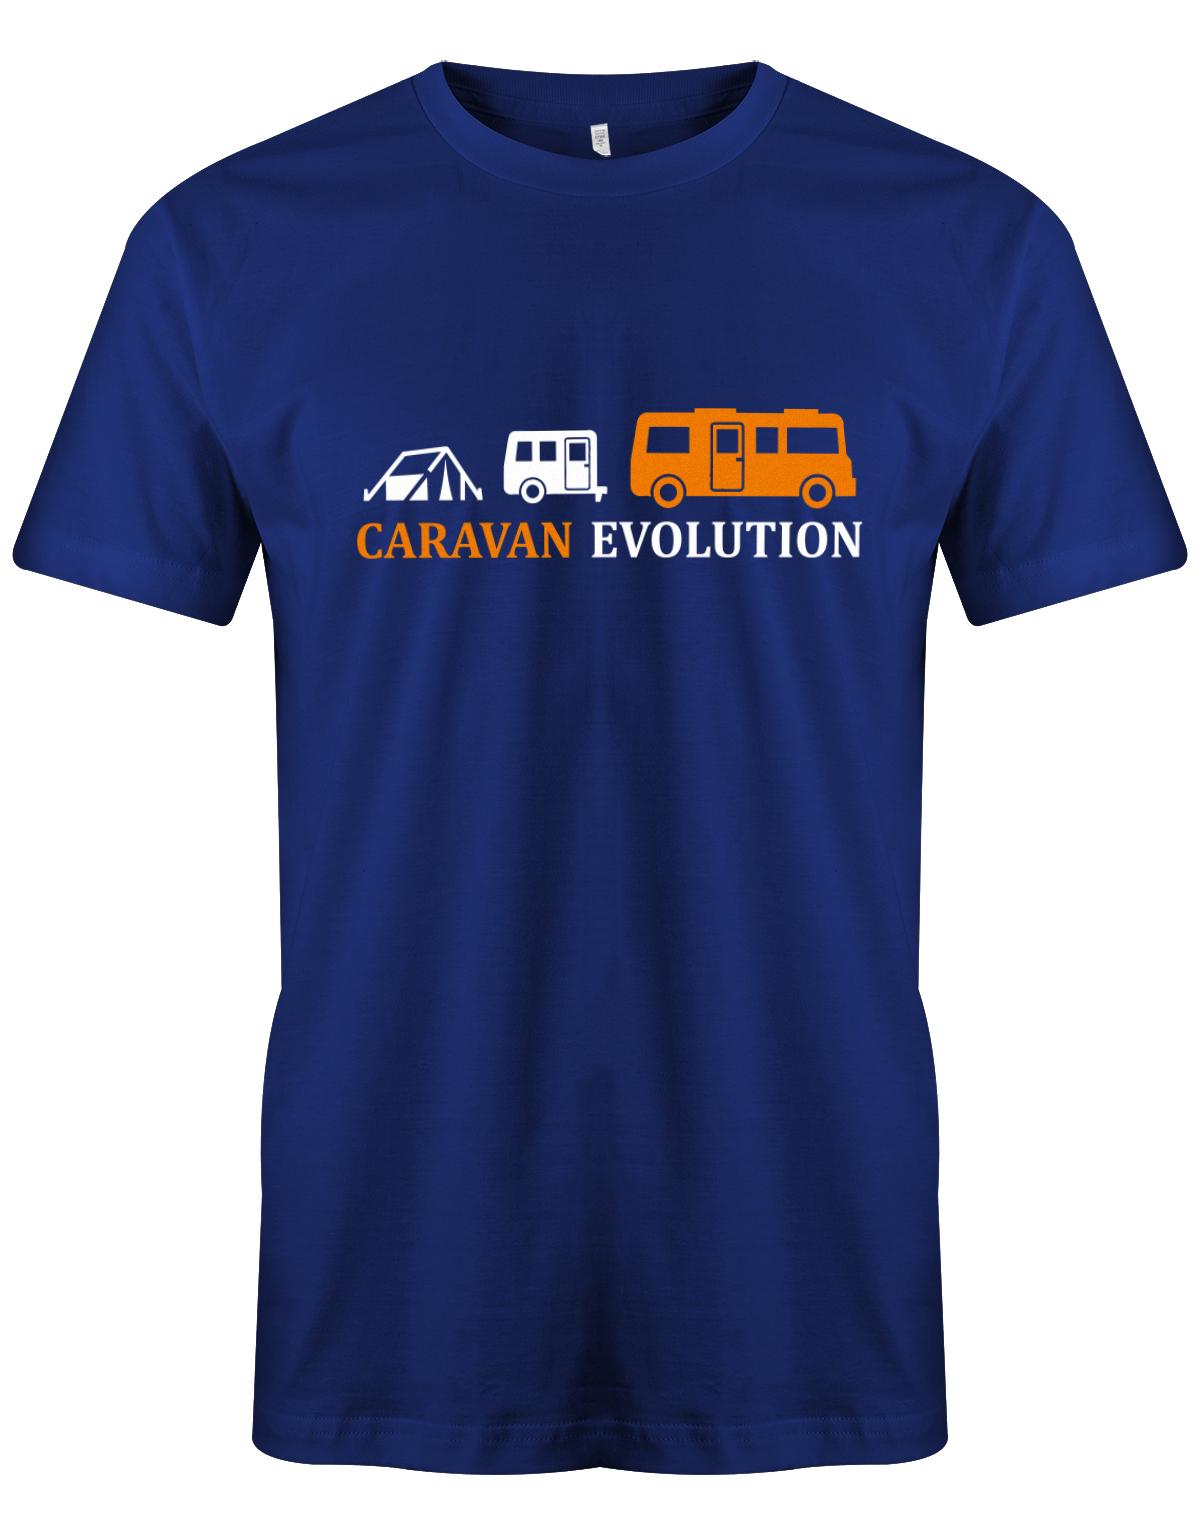 Caravan-Evolution-Herren-Shirt-Royalblau